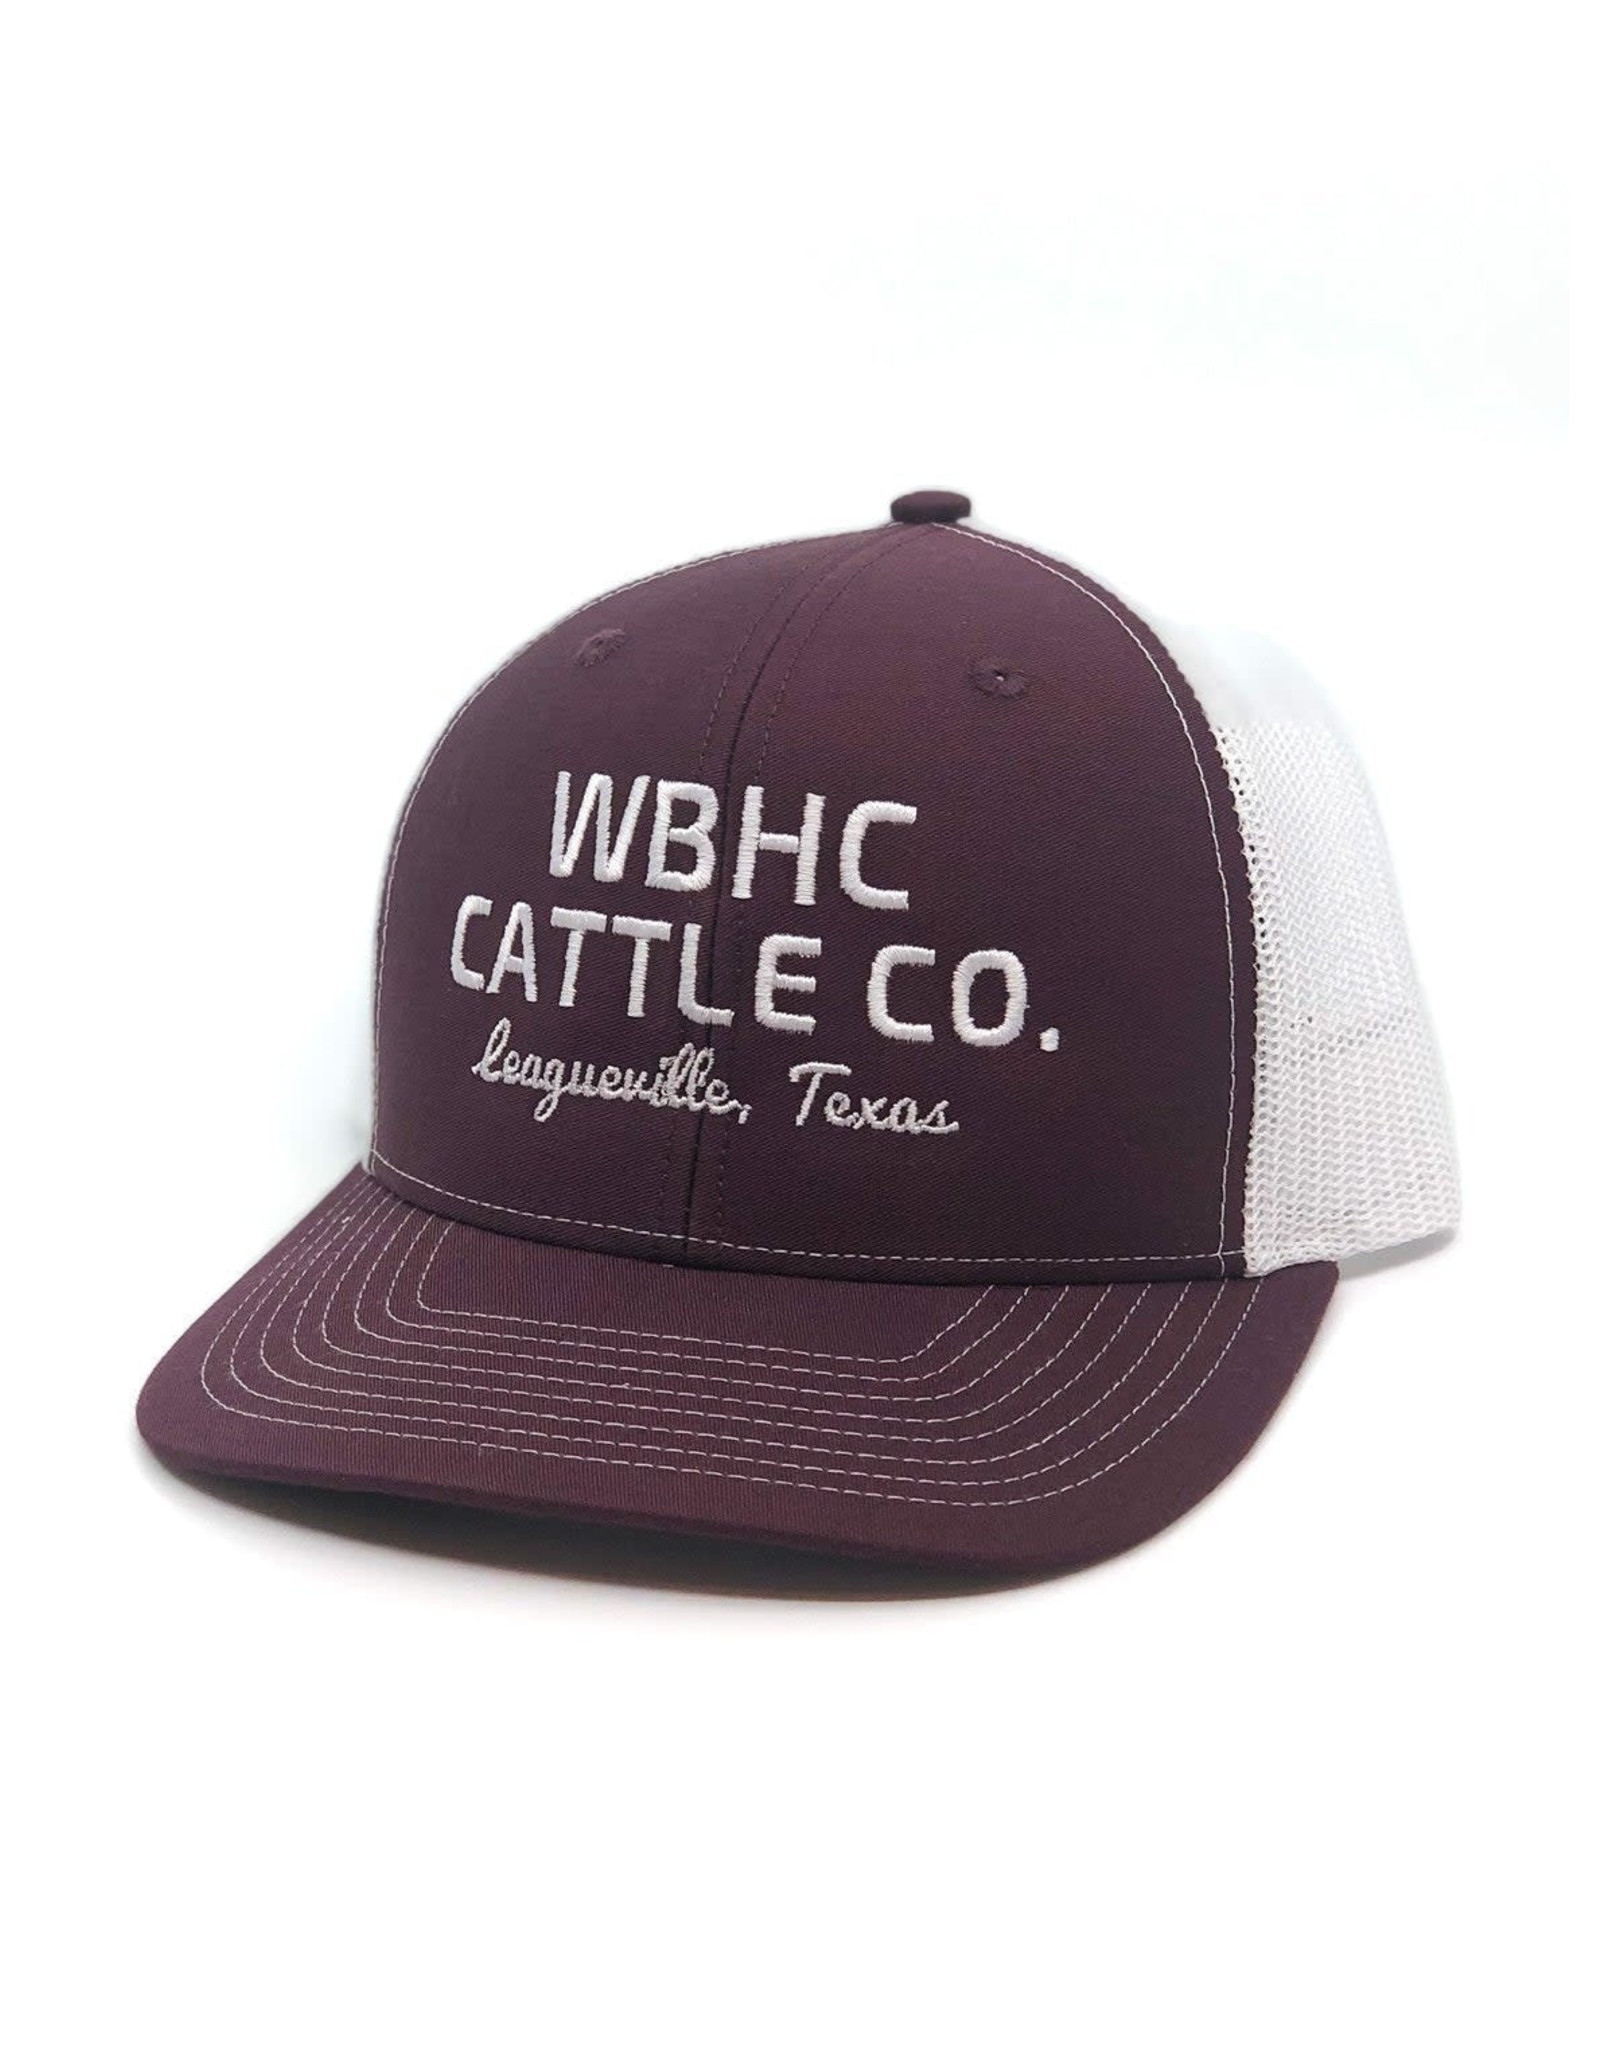 Whiskey Bent Hat Co. Whiskey Bent Hat Co. Cattleman Maroon Trucker Cap